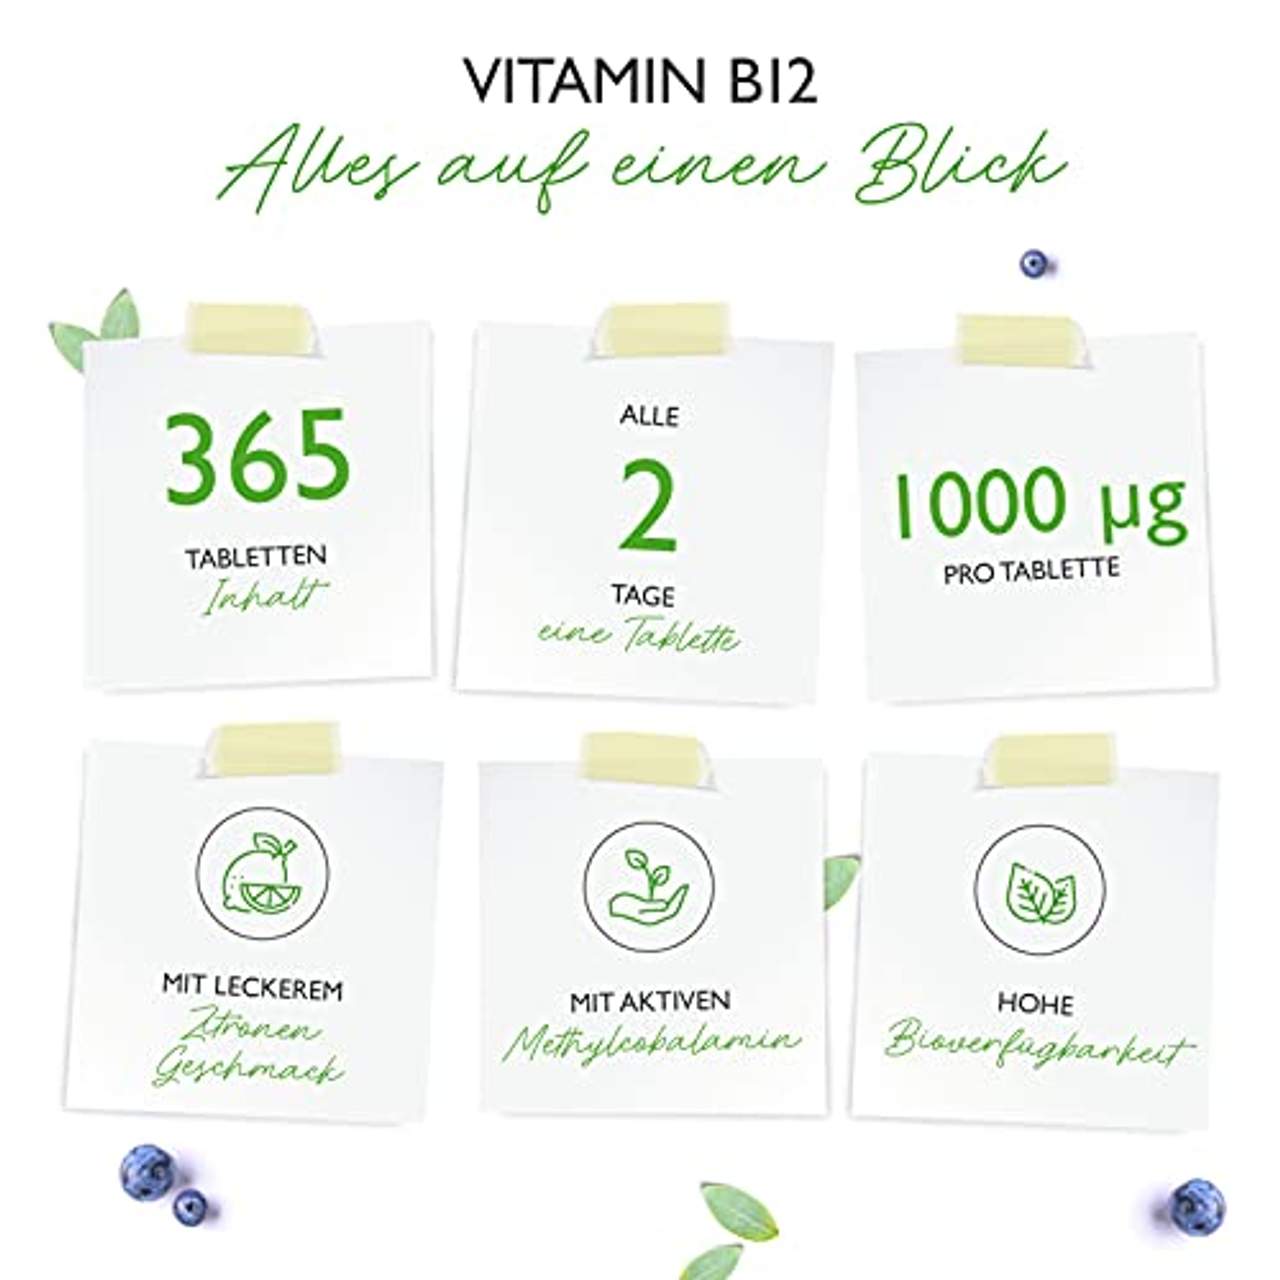 Vit4ever Vitamin B12 Vegan